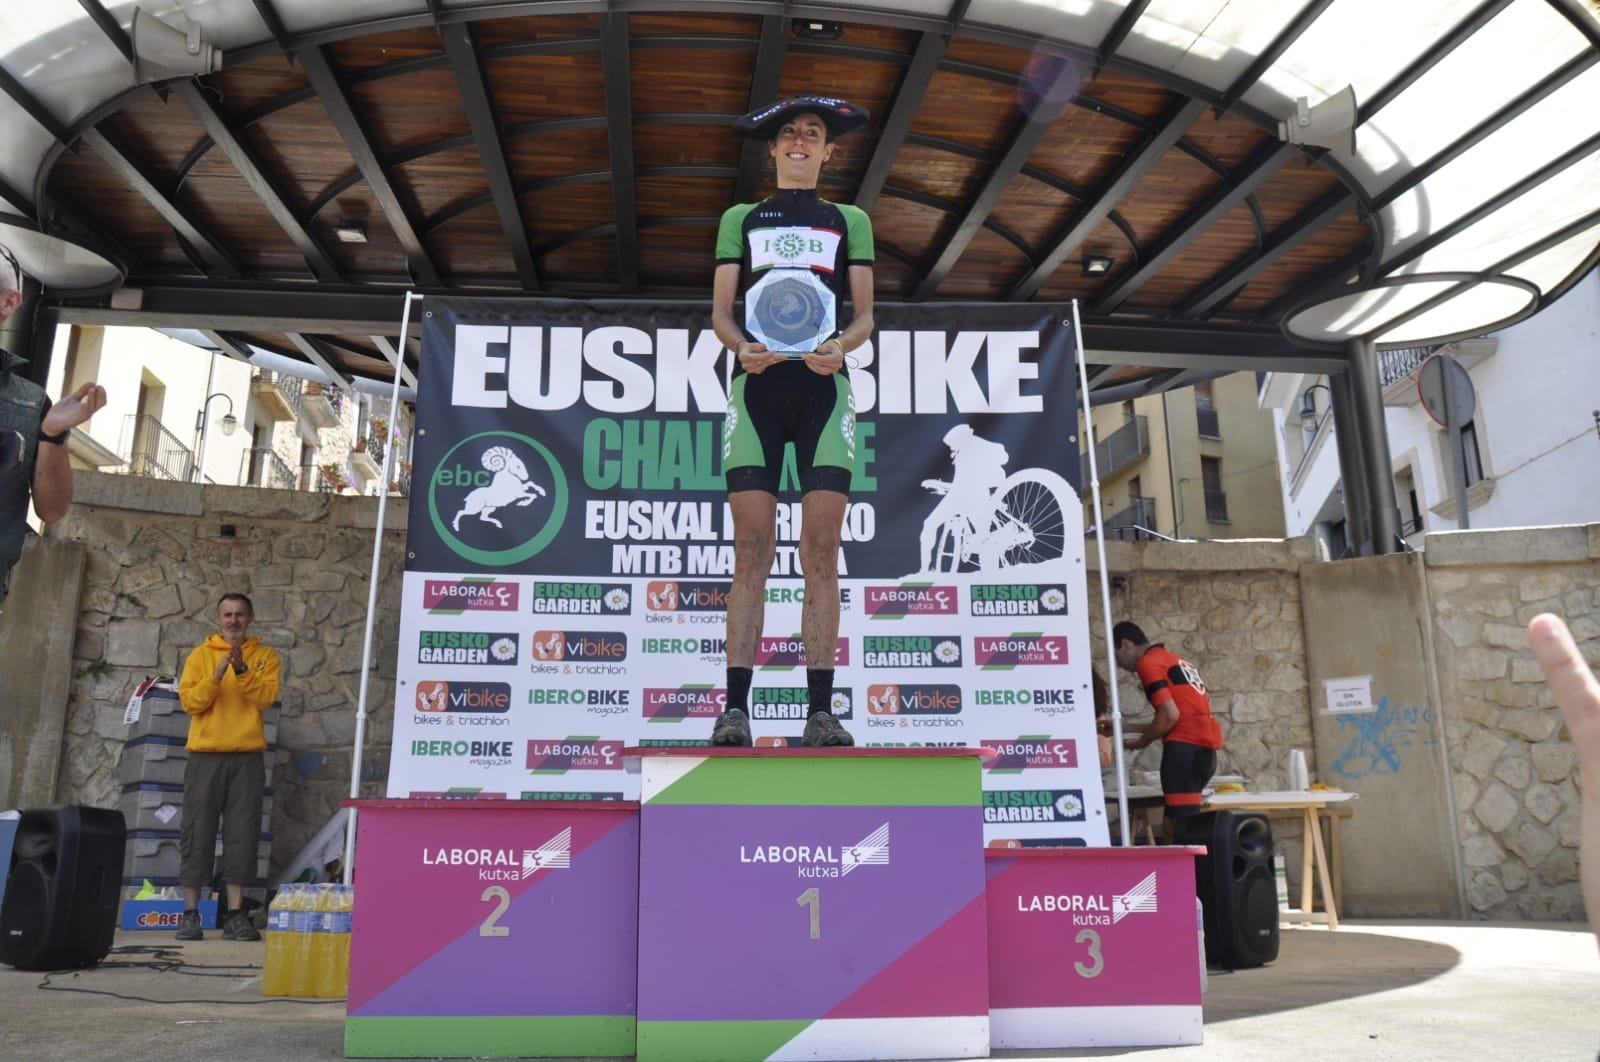 Eusko Bike Challenge (1)